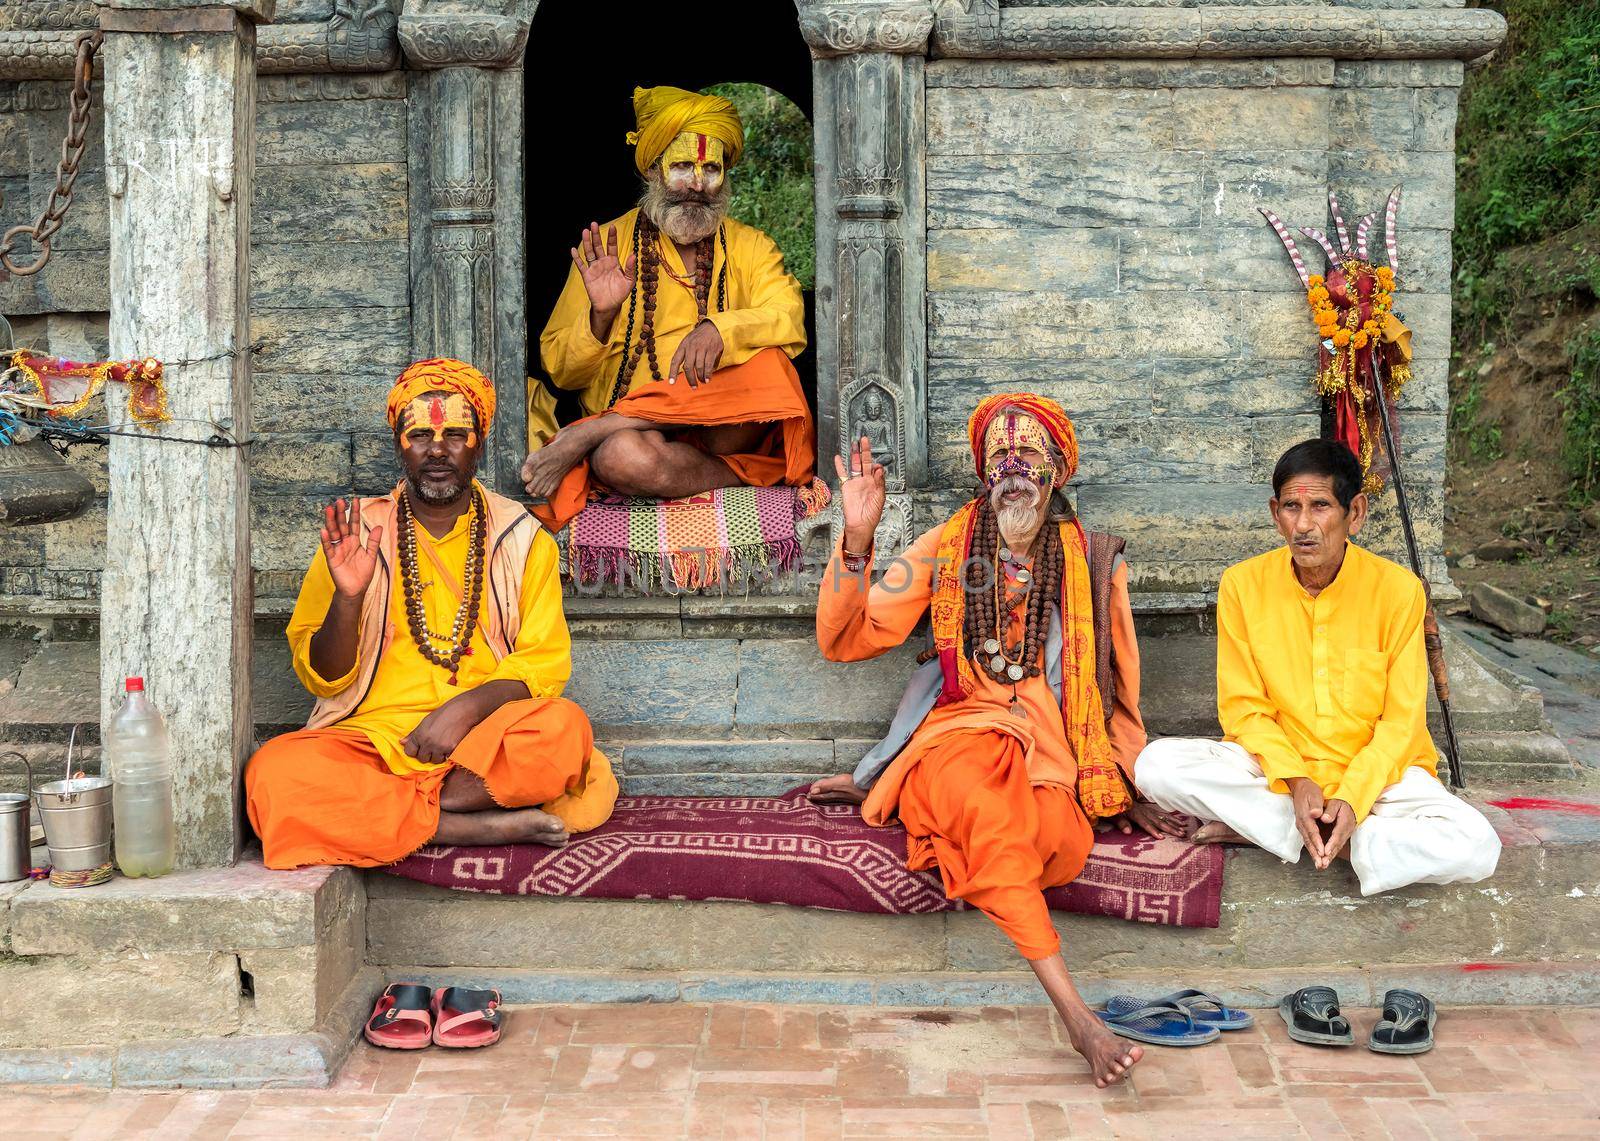 Sadhu holy men in front of Pashupatinath temple in Kathmandu. by tan4ikk1